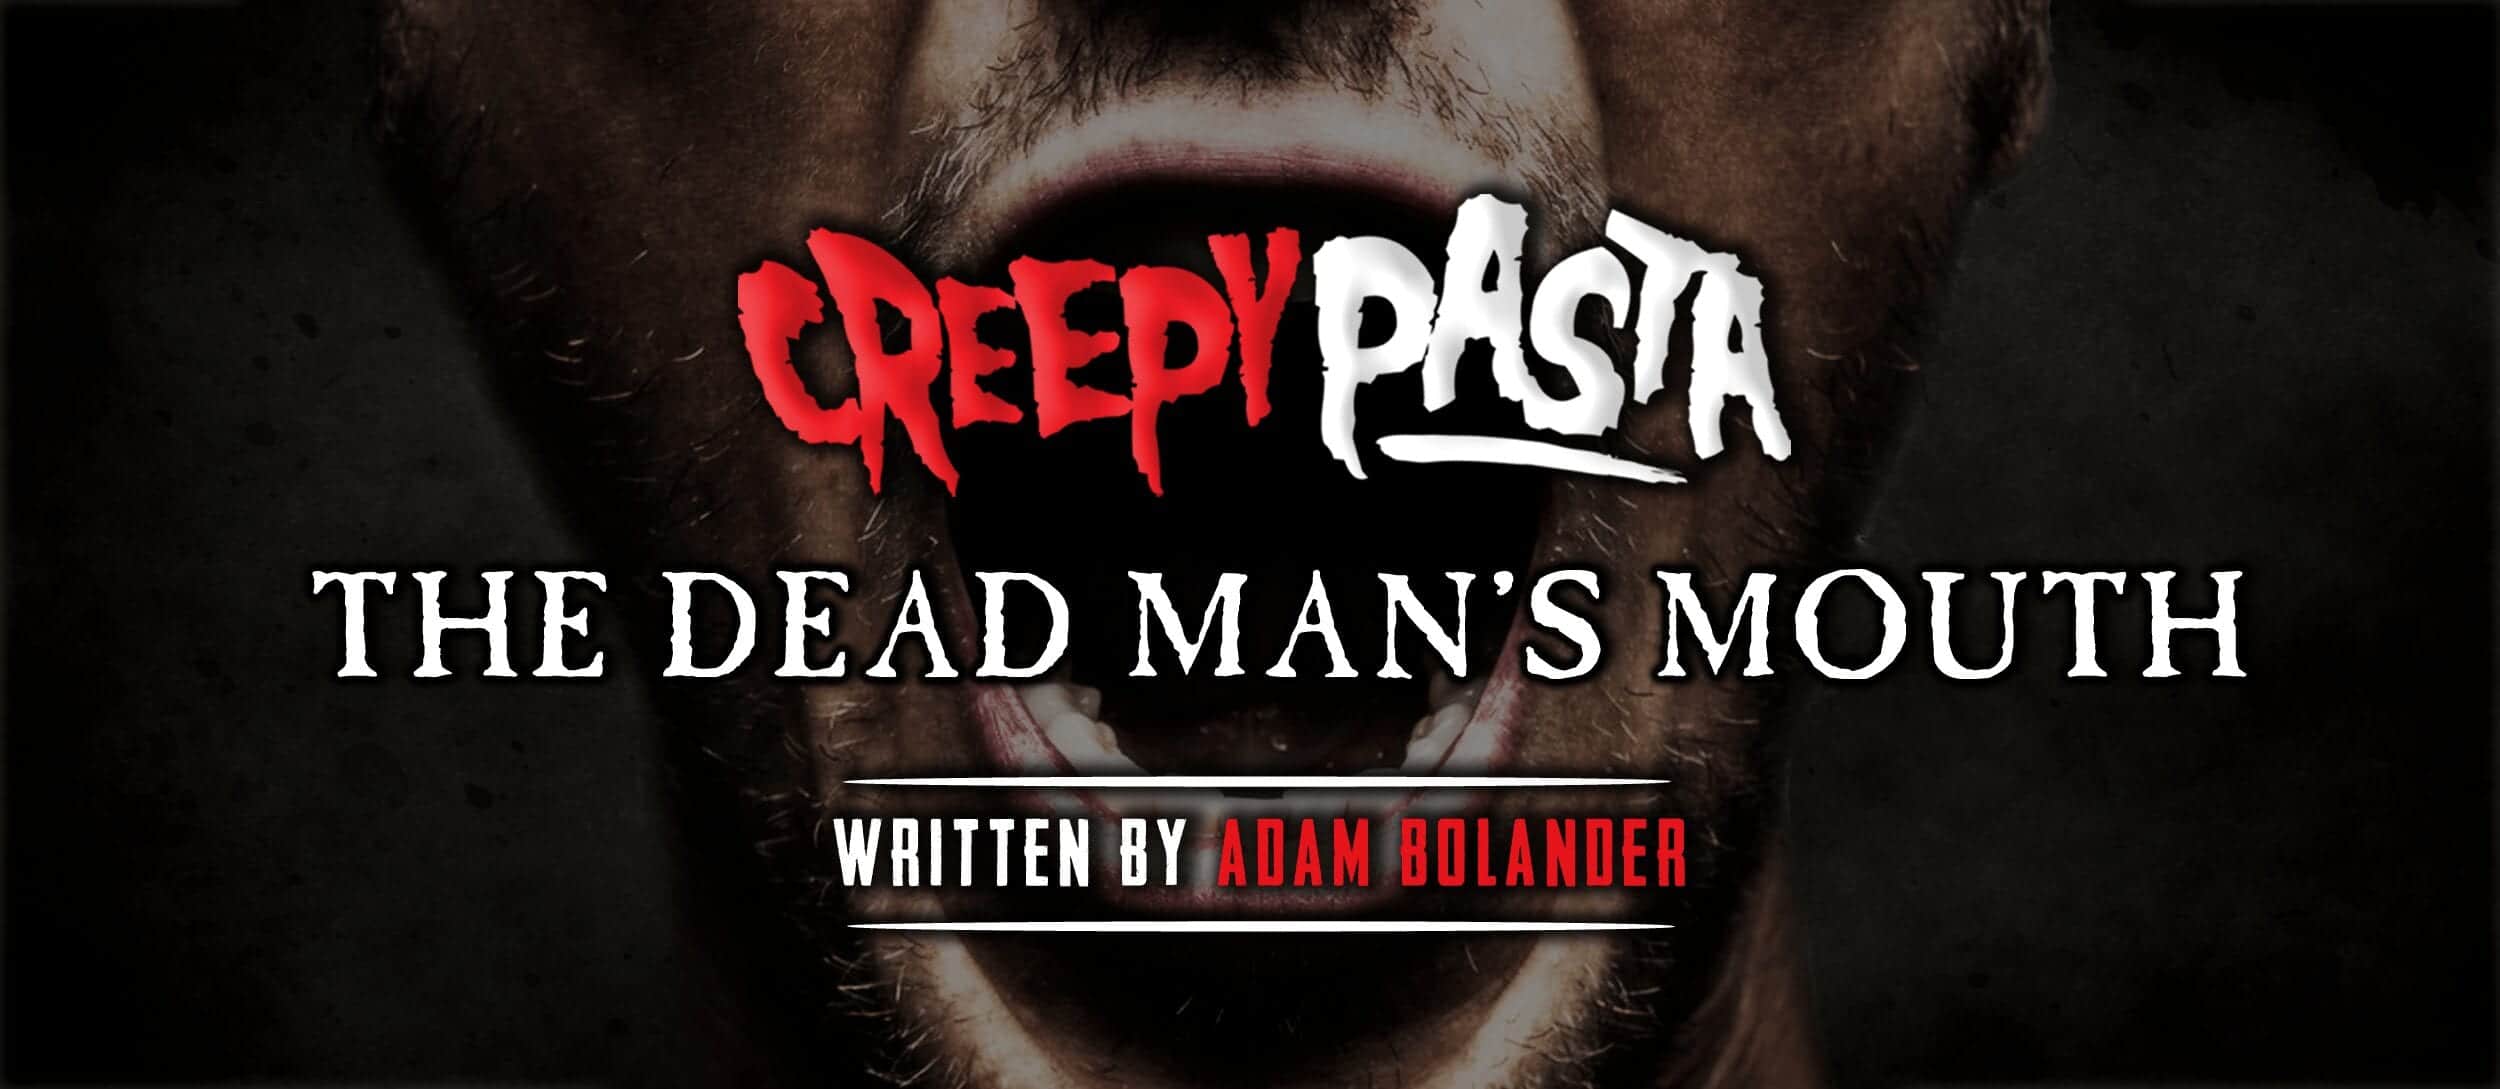 The Dead Man S Mouth Creepypasta - dead man killed by slenderman roblox